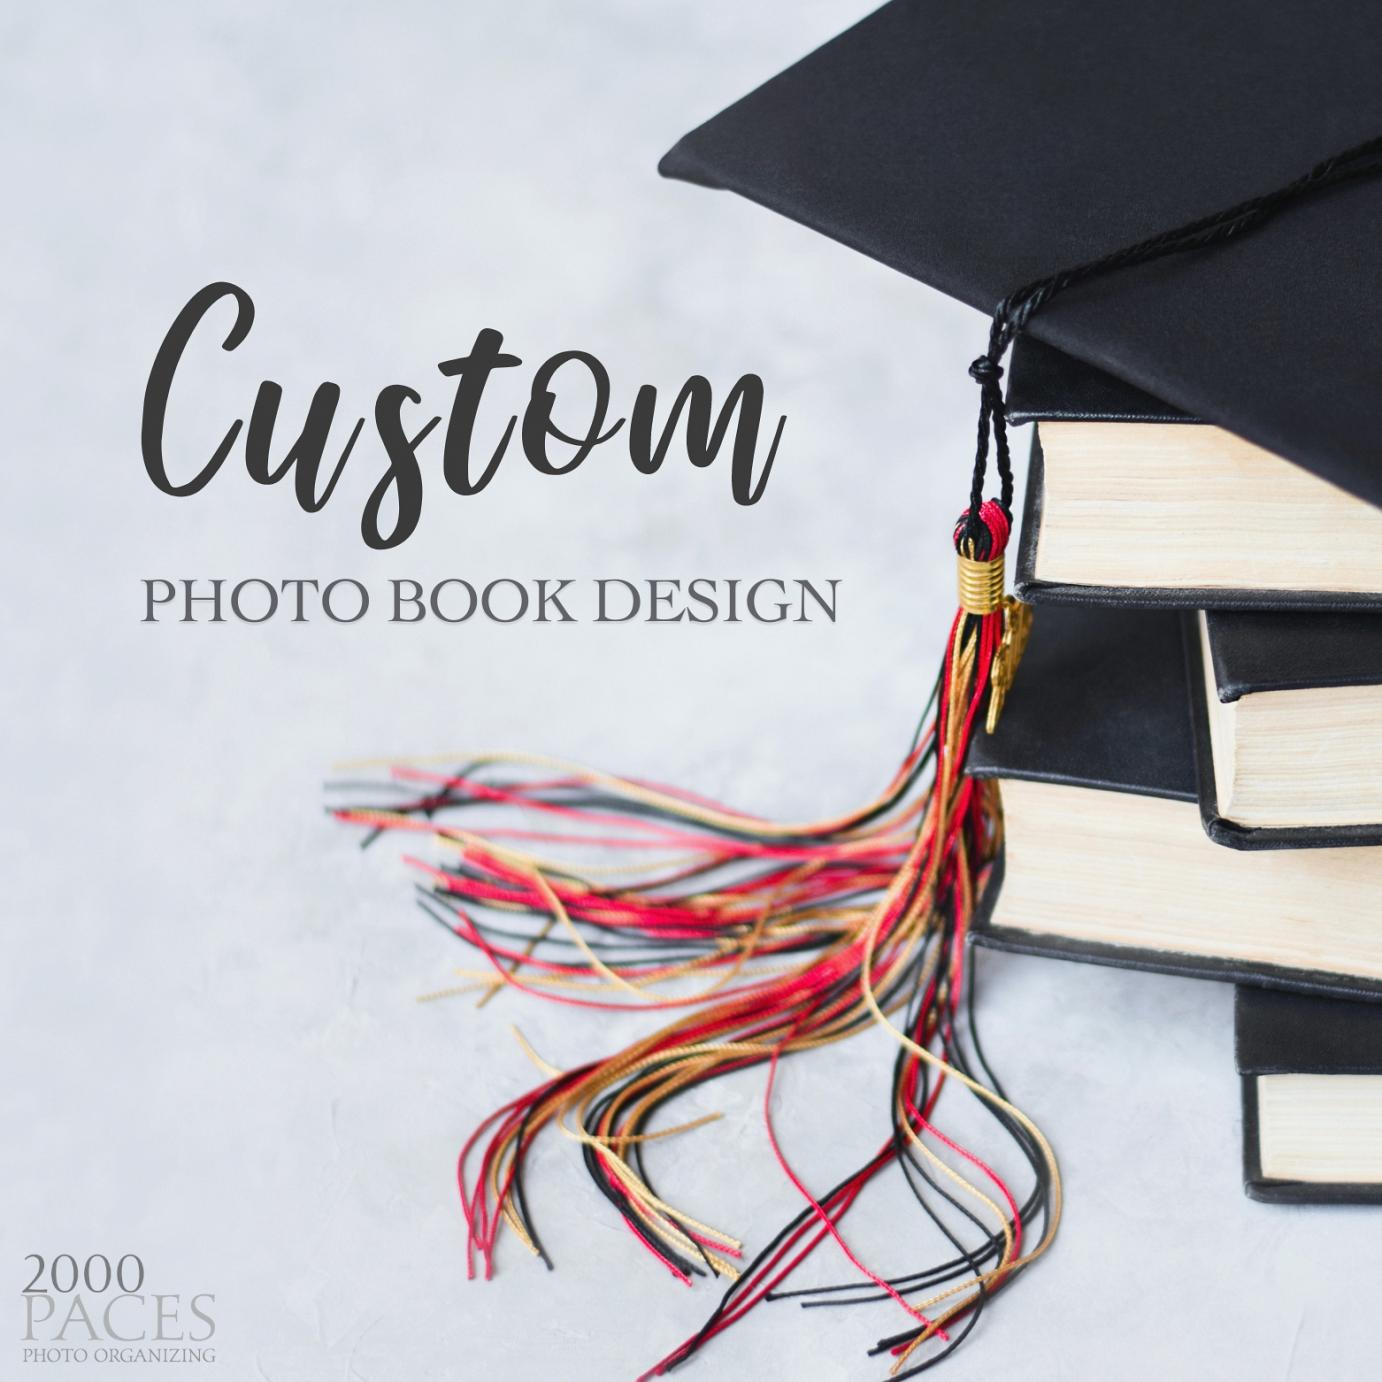 Graduation Photo Books